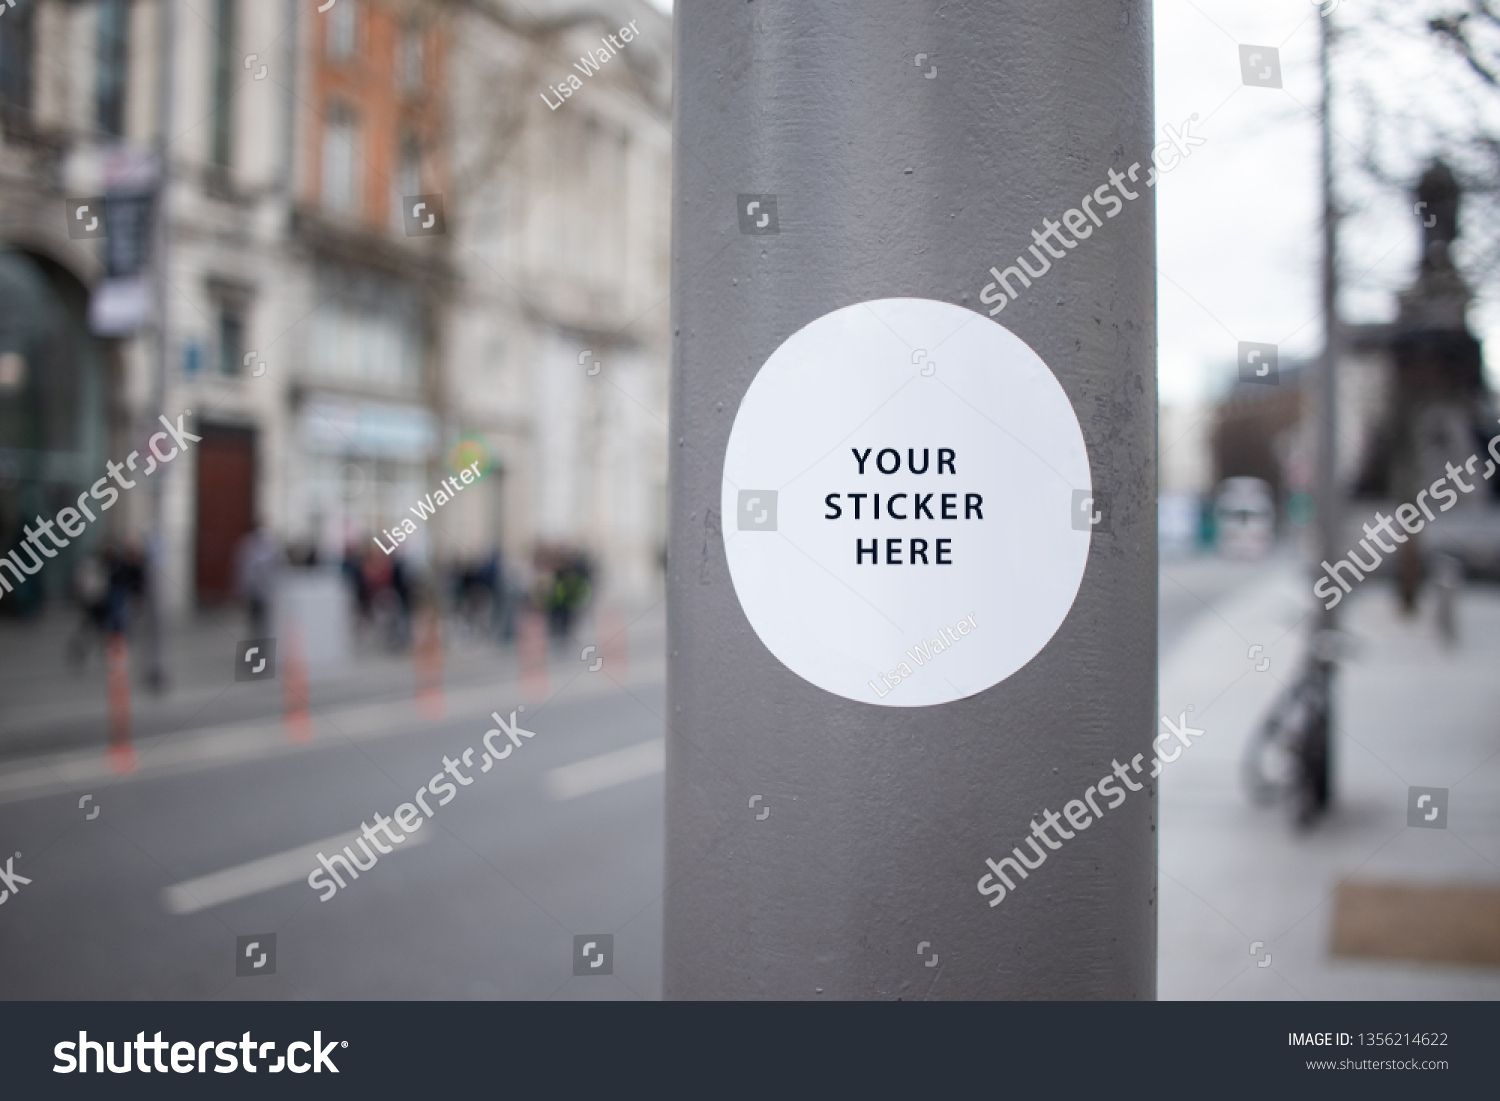 Sticker Mockup on a street lamp in a busy city street #1356214622